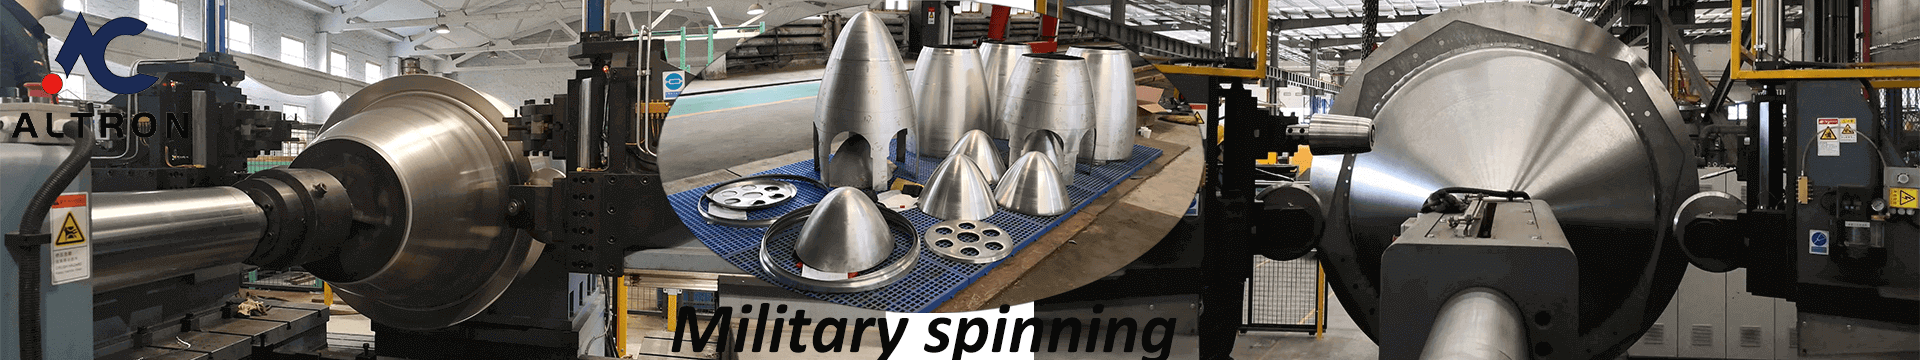 Military metal spinning